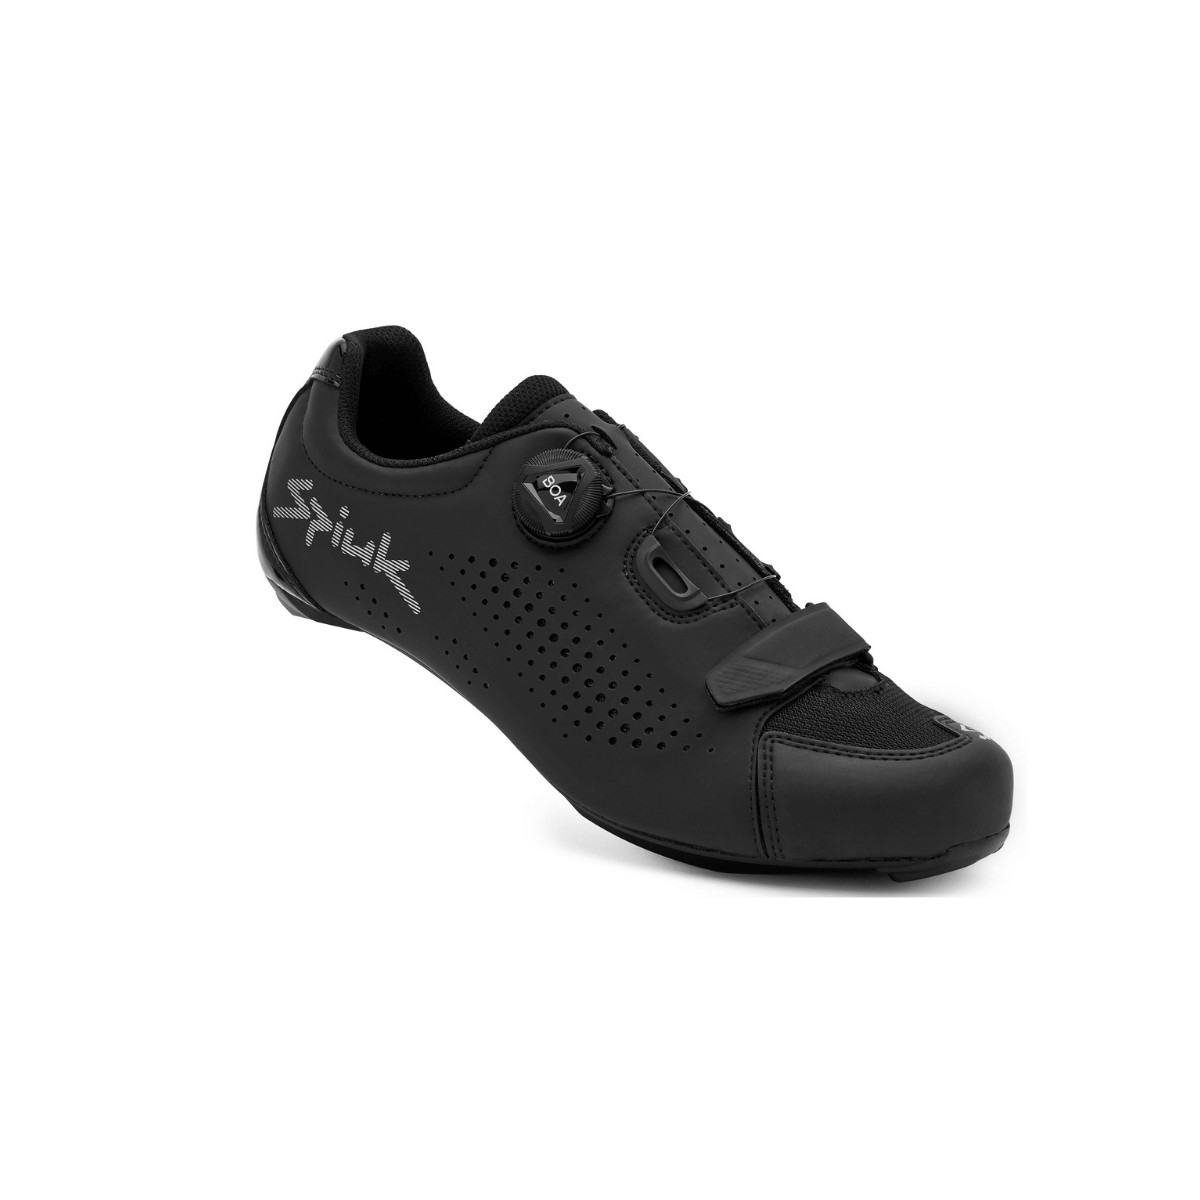 Spiuk Caray Road Shoes Black, Size 42 - EUR